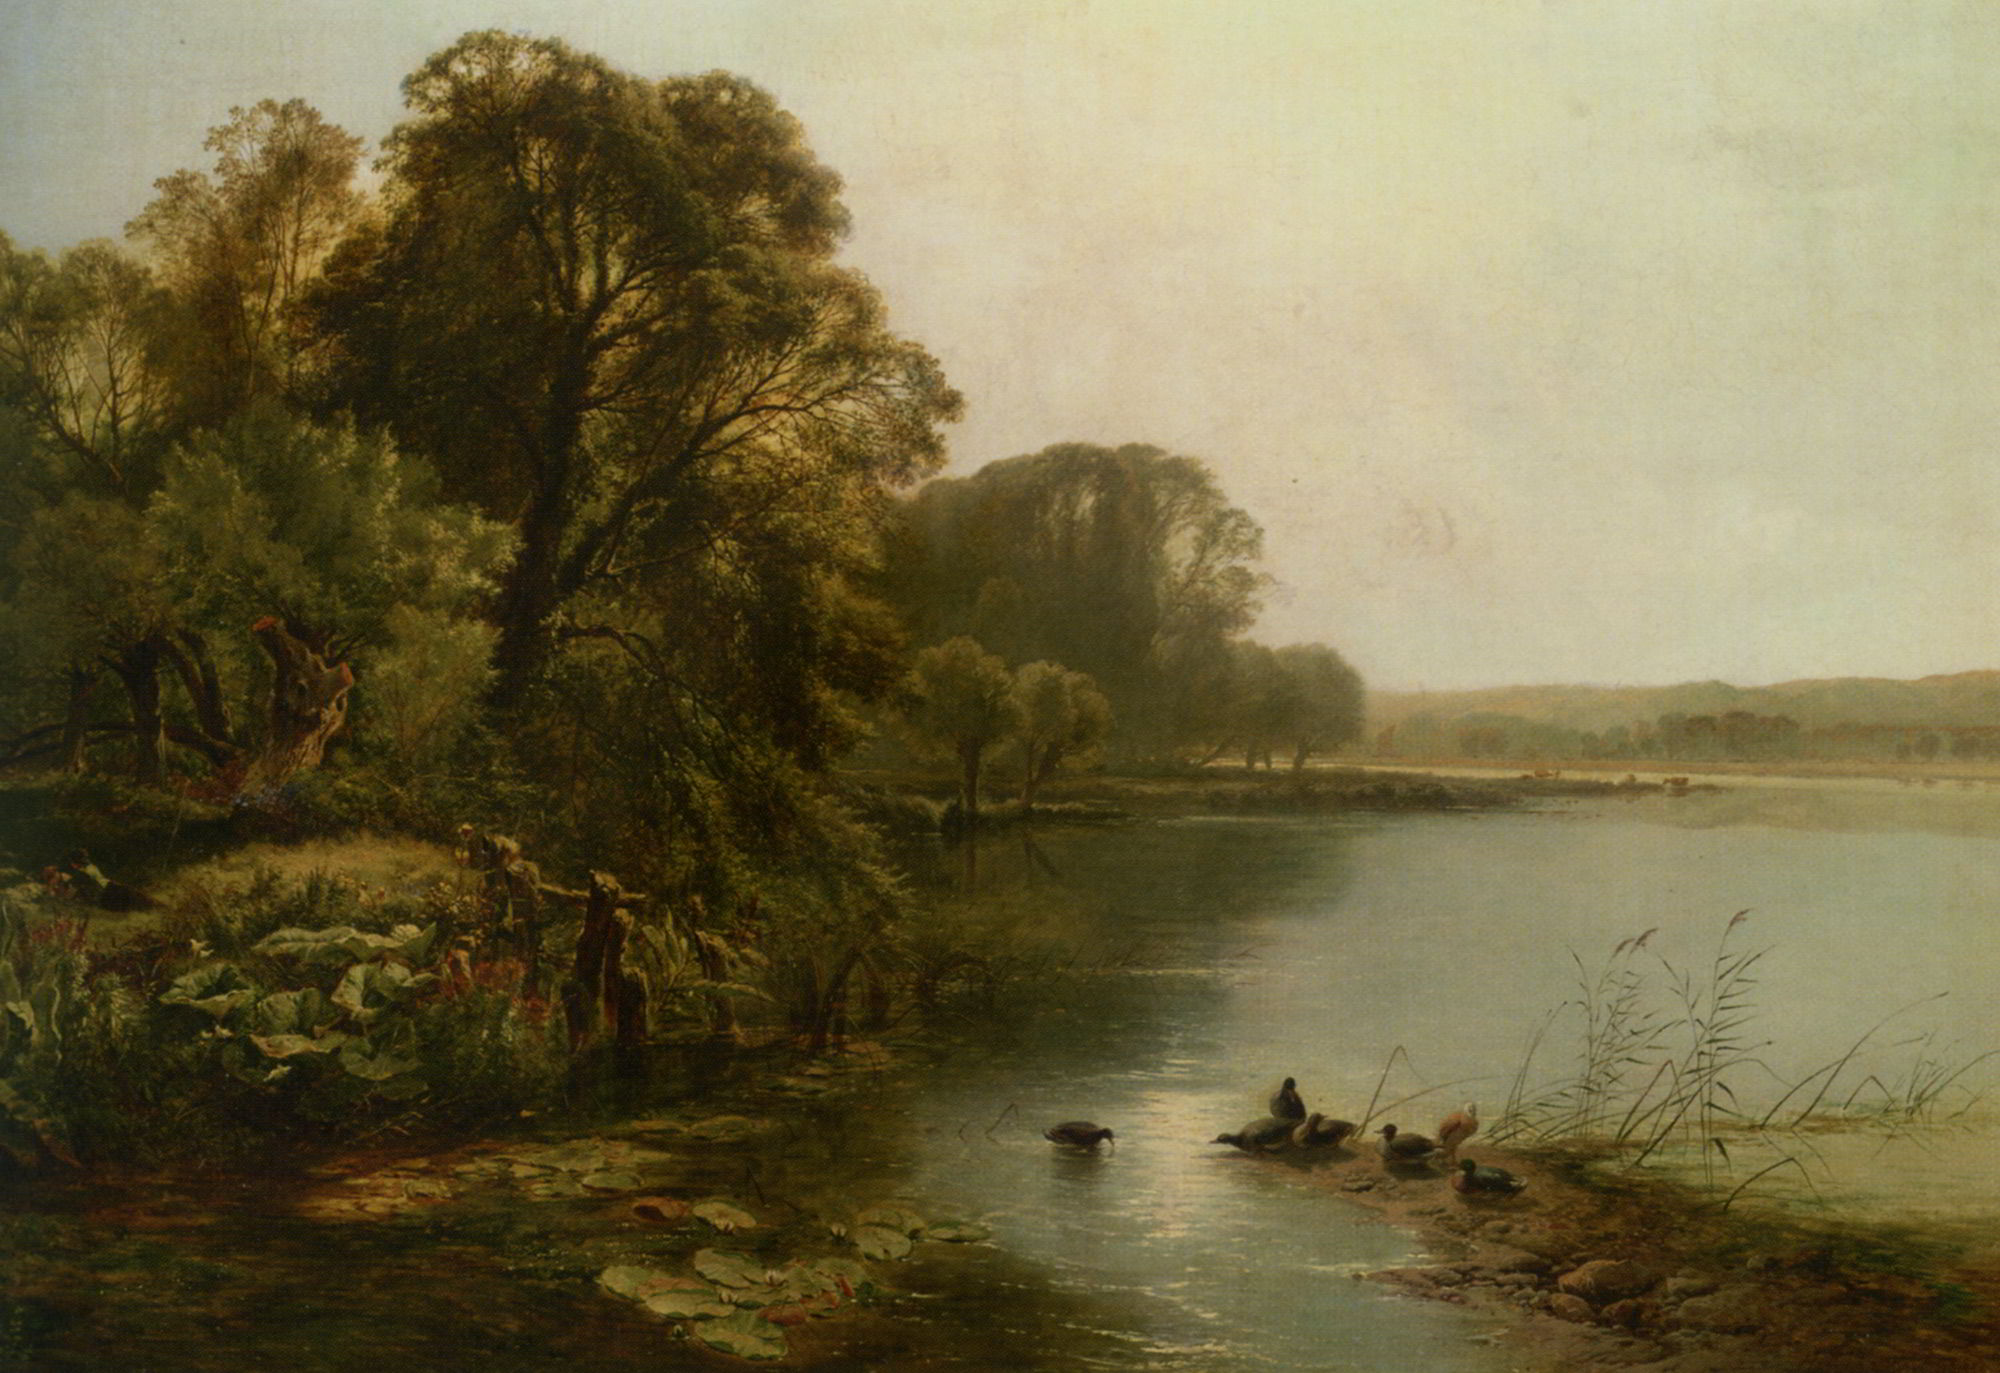 Early Mornings on the Thames by Henry John Boddington